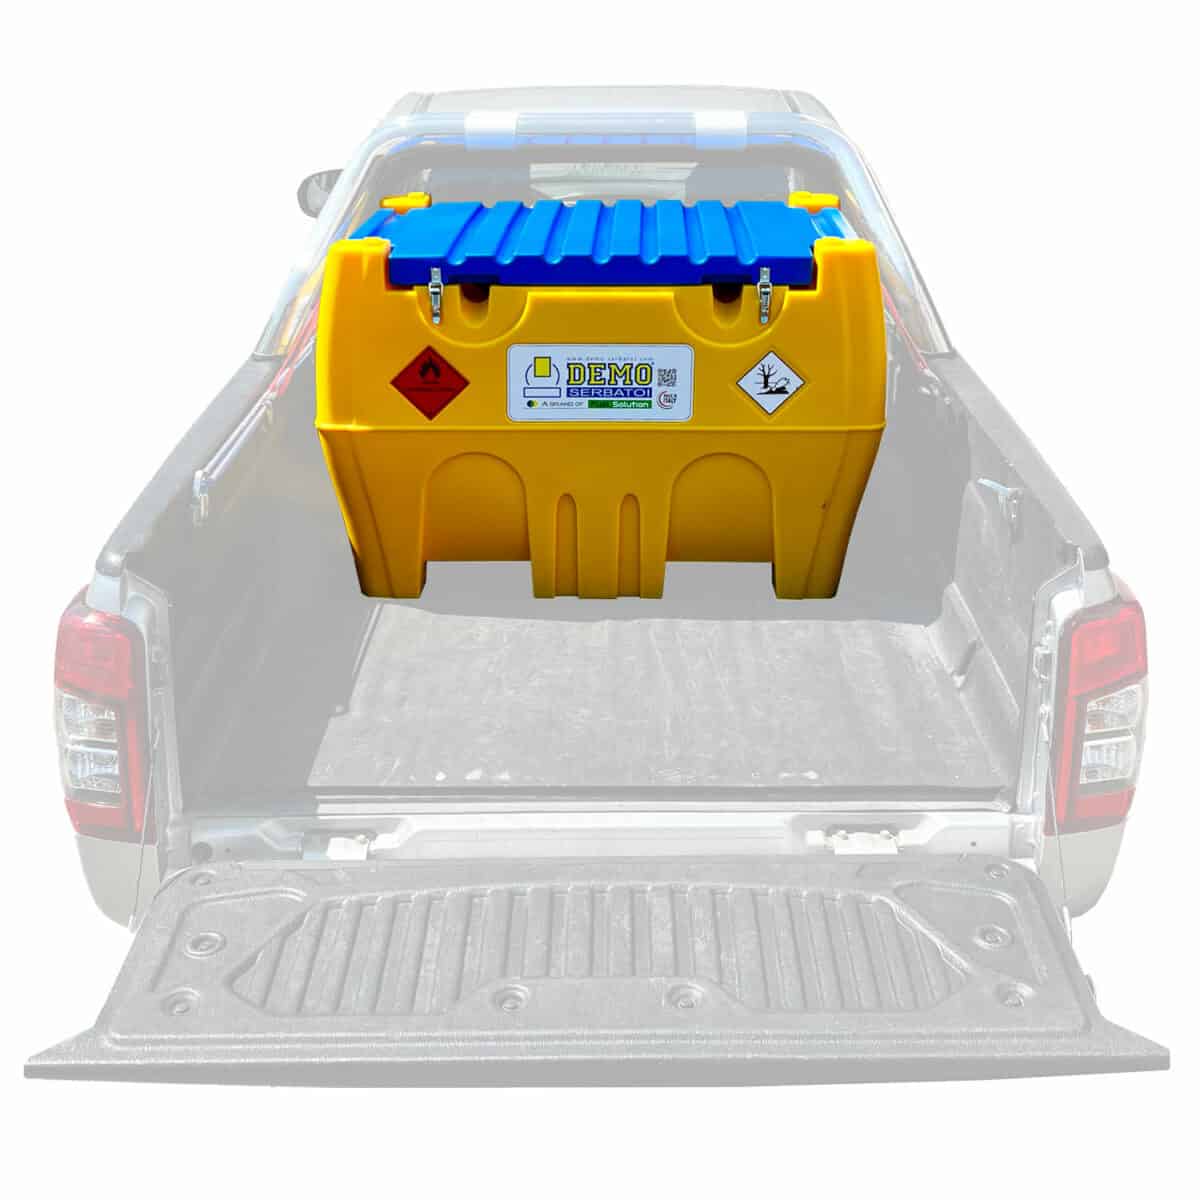 Portable diesel fuel tank